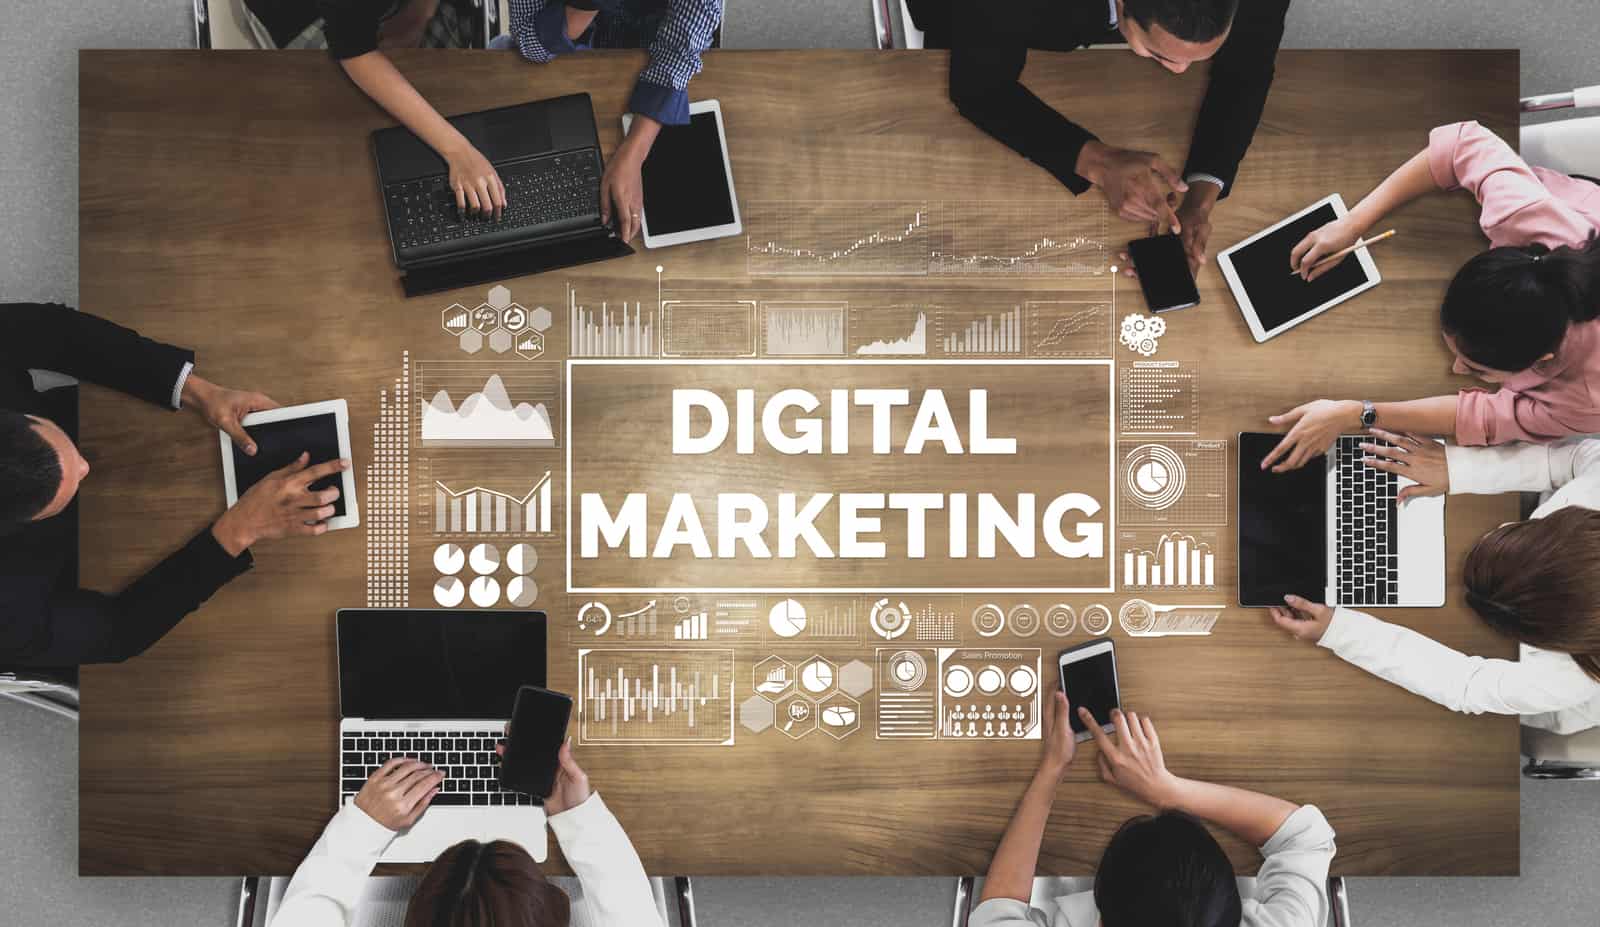 Digital marketing Trends 2018 for Small Businesses! - RedAlkemi